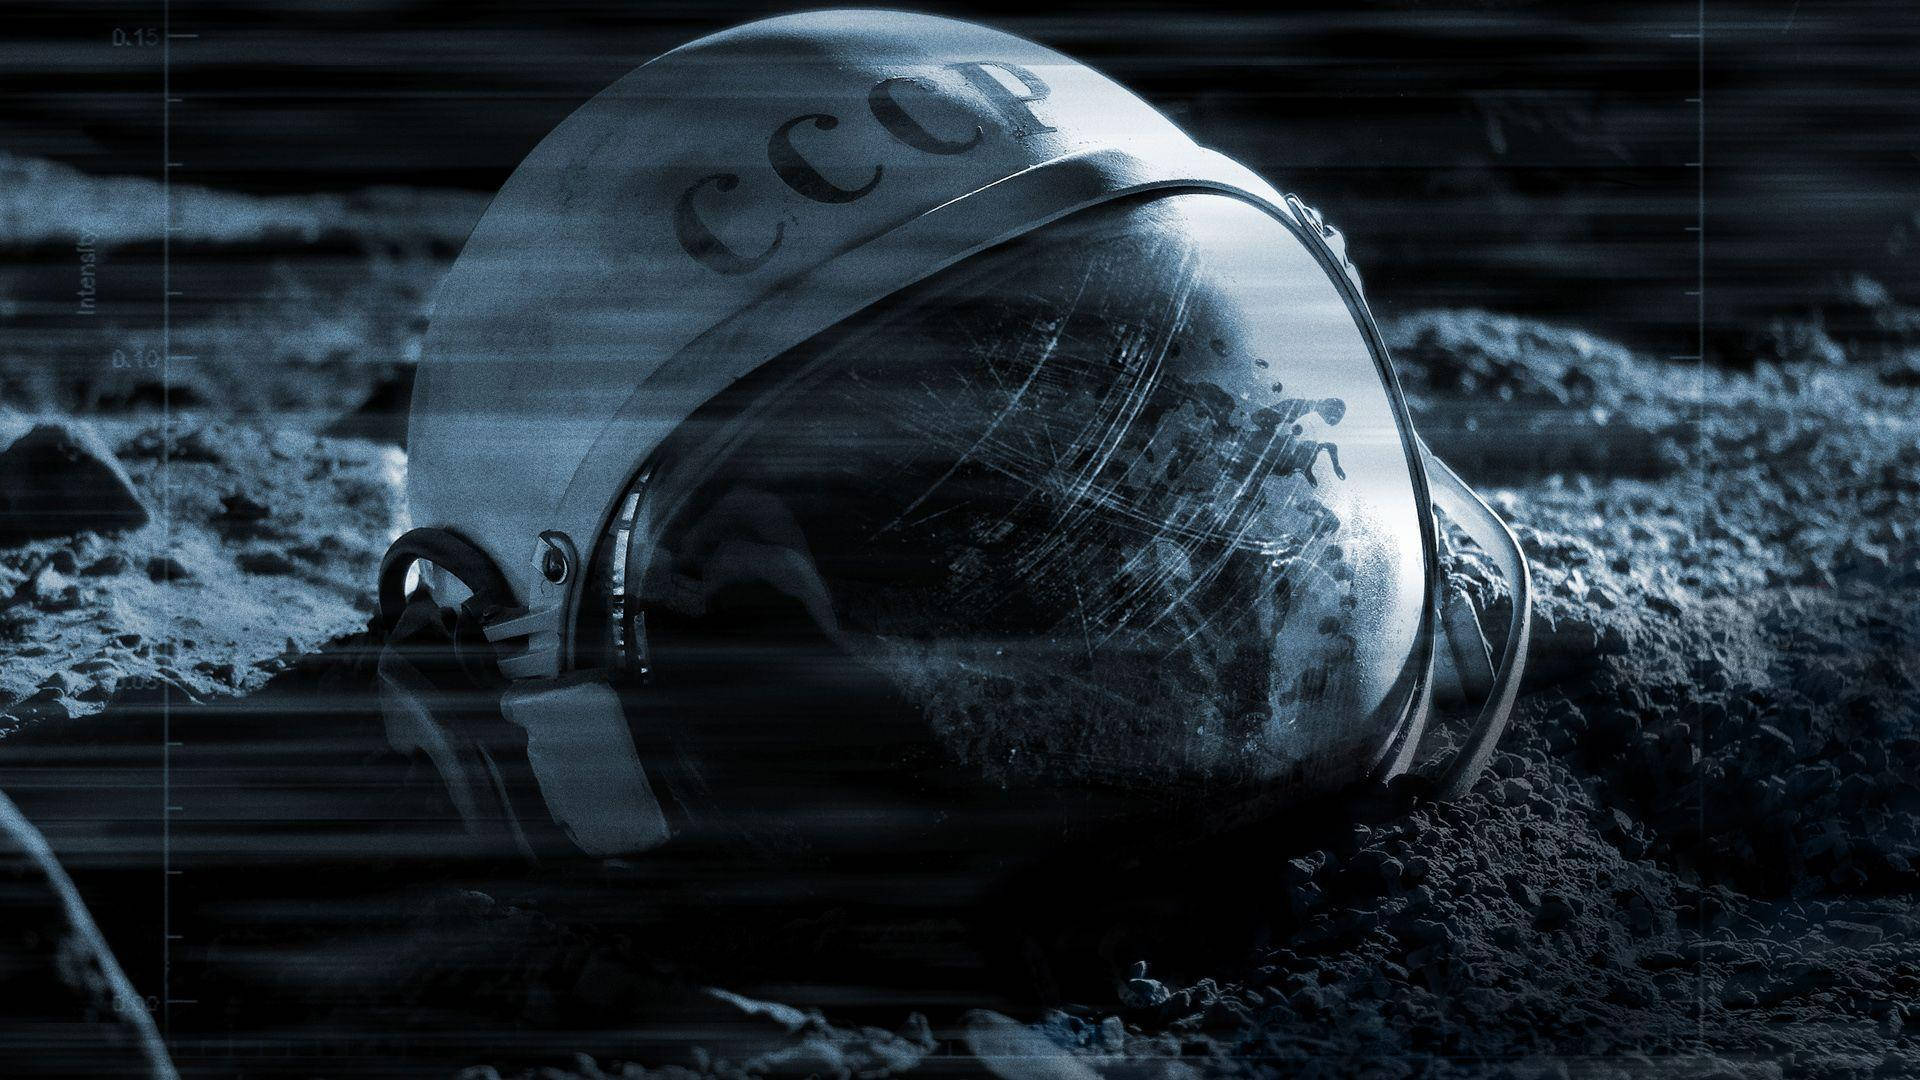 Magnificent Image Of Spaceman Helmet Background